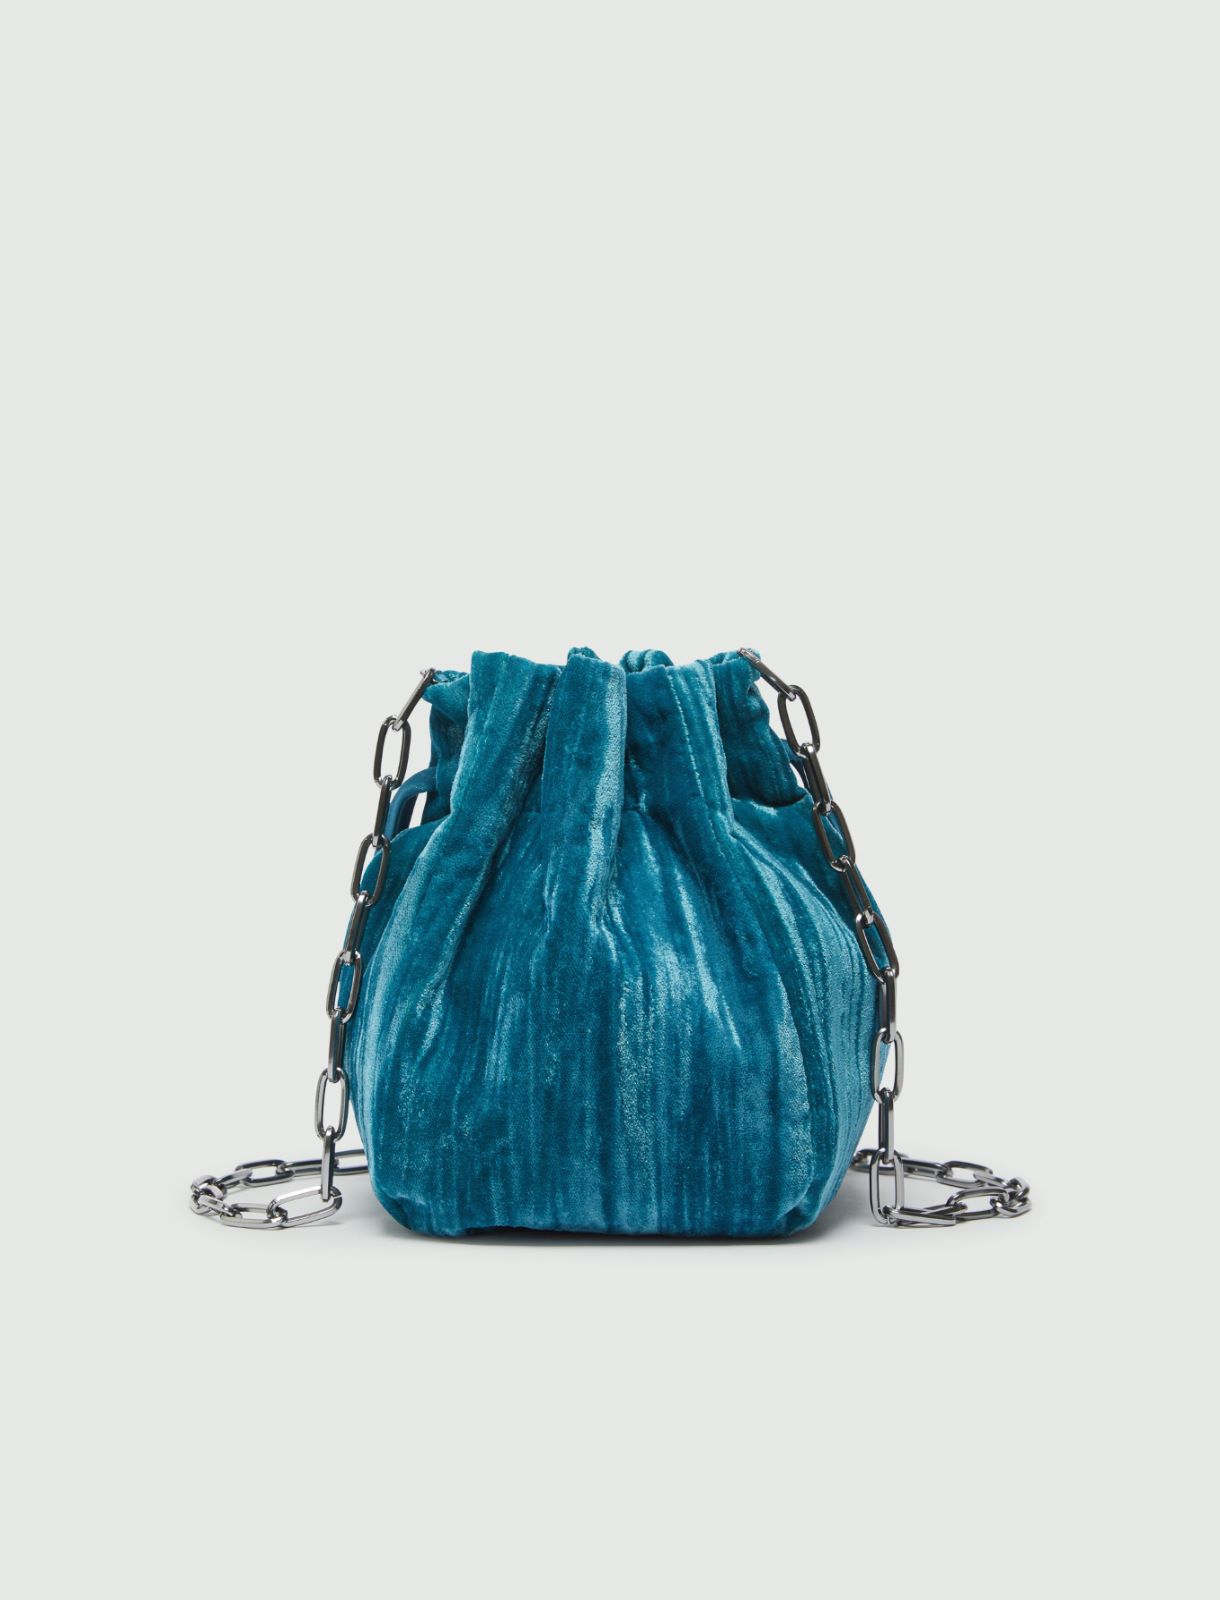 Velvet bag - Peacock blue - Marina Rinaldi